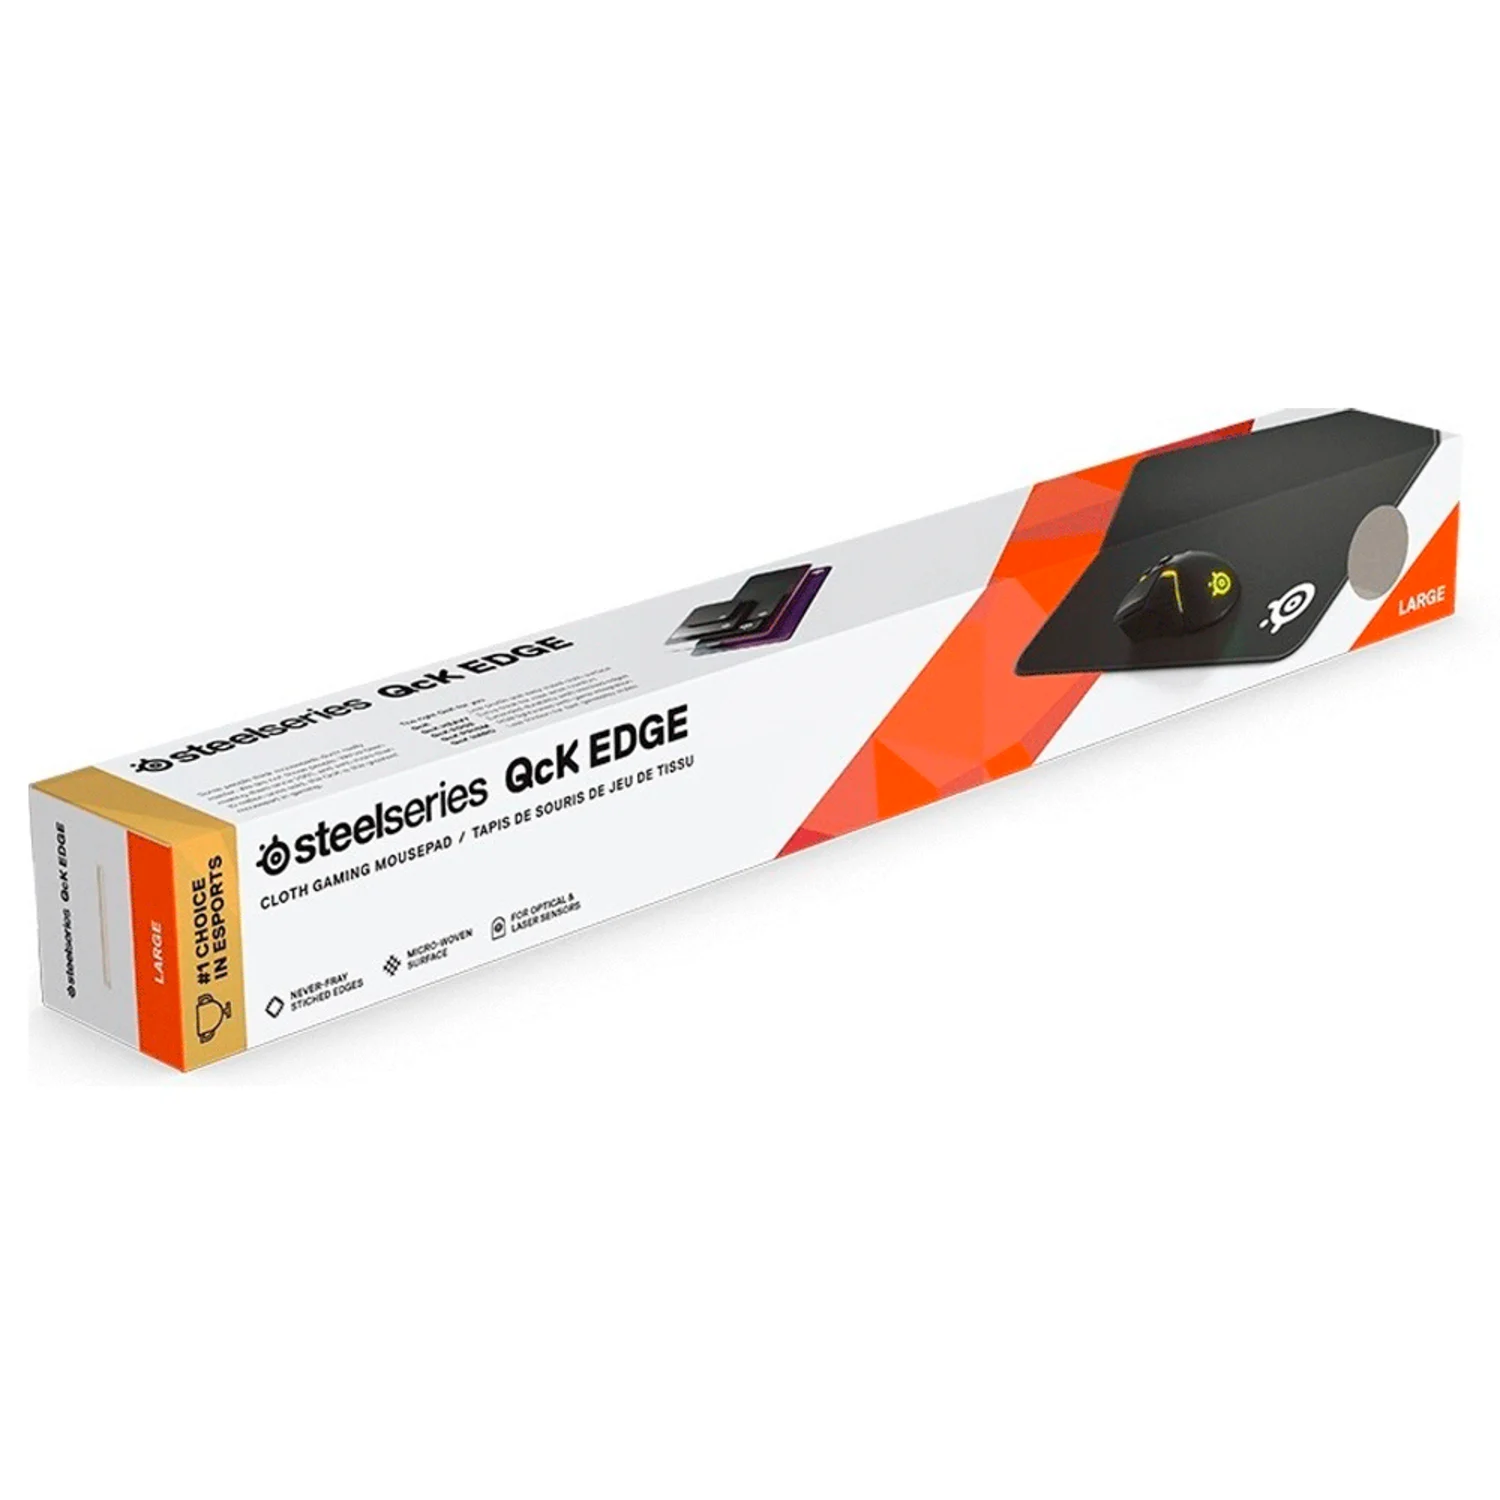 Mousepad Steelseries Qck Edge Large - (63823)